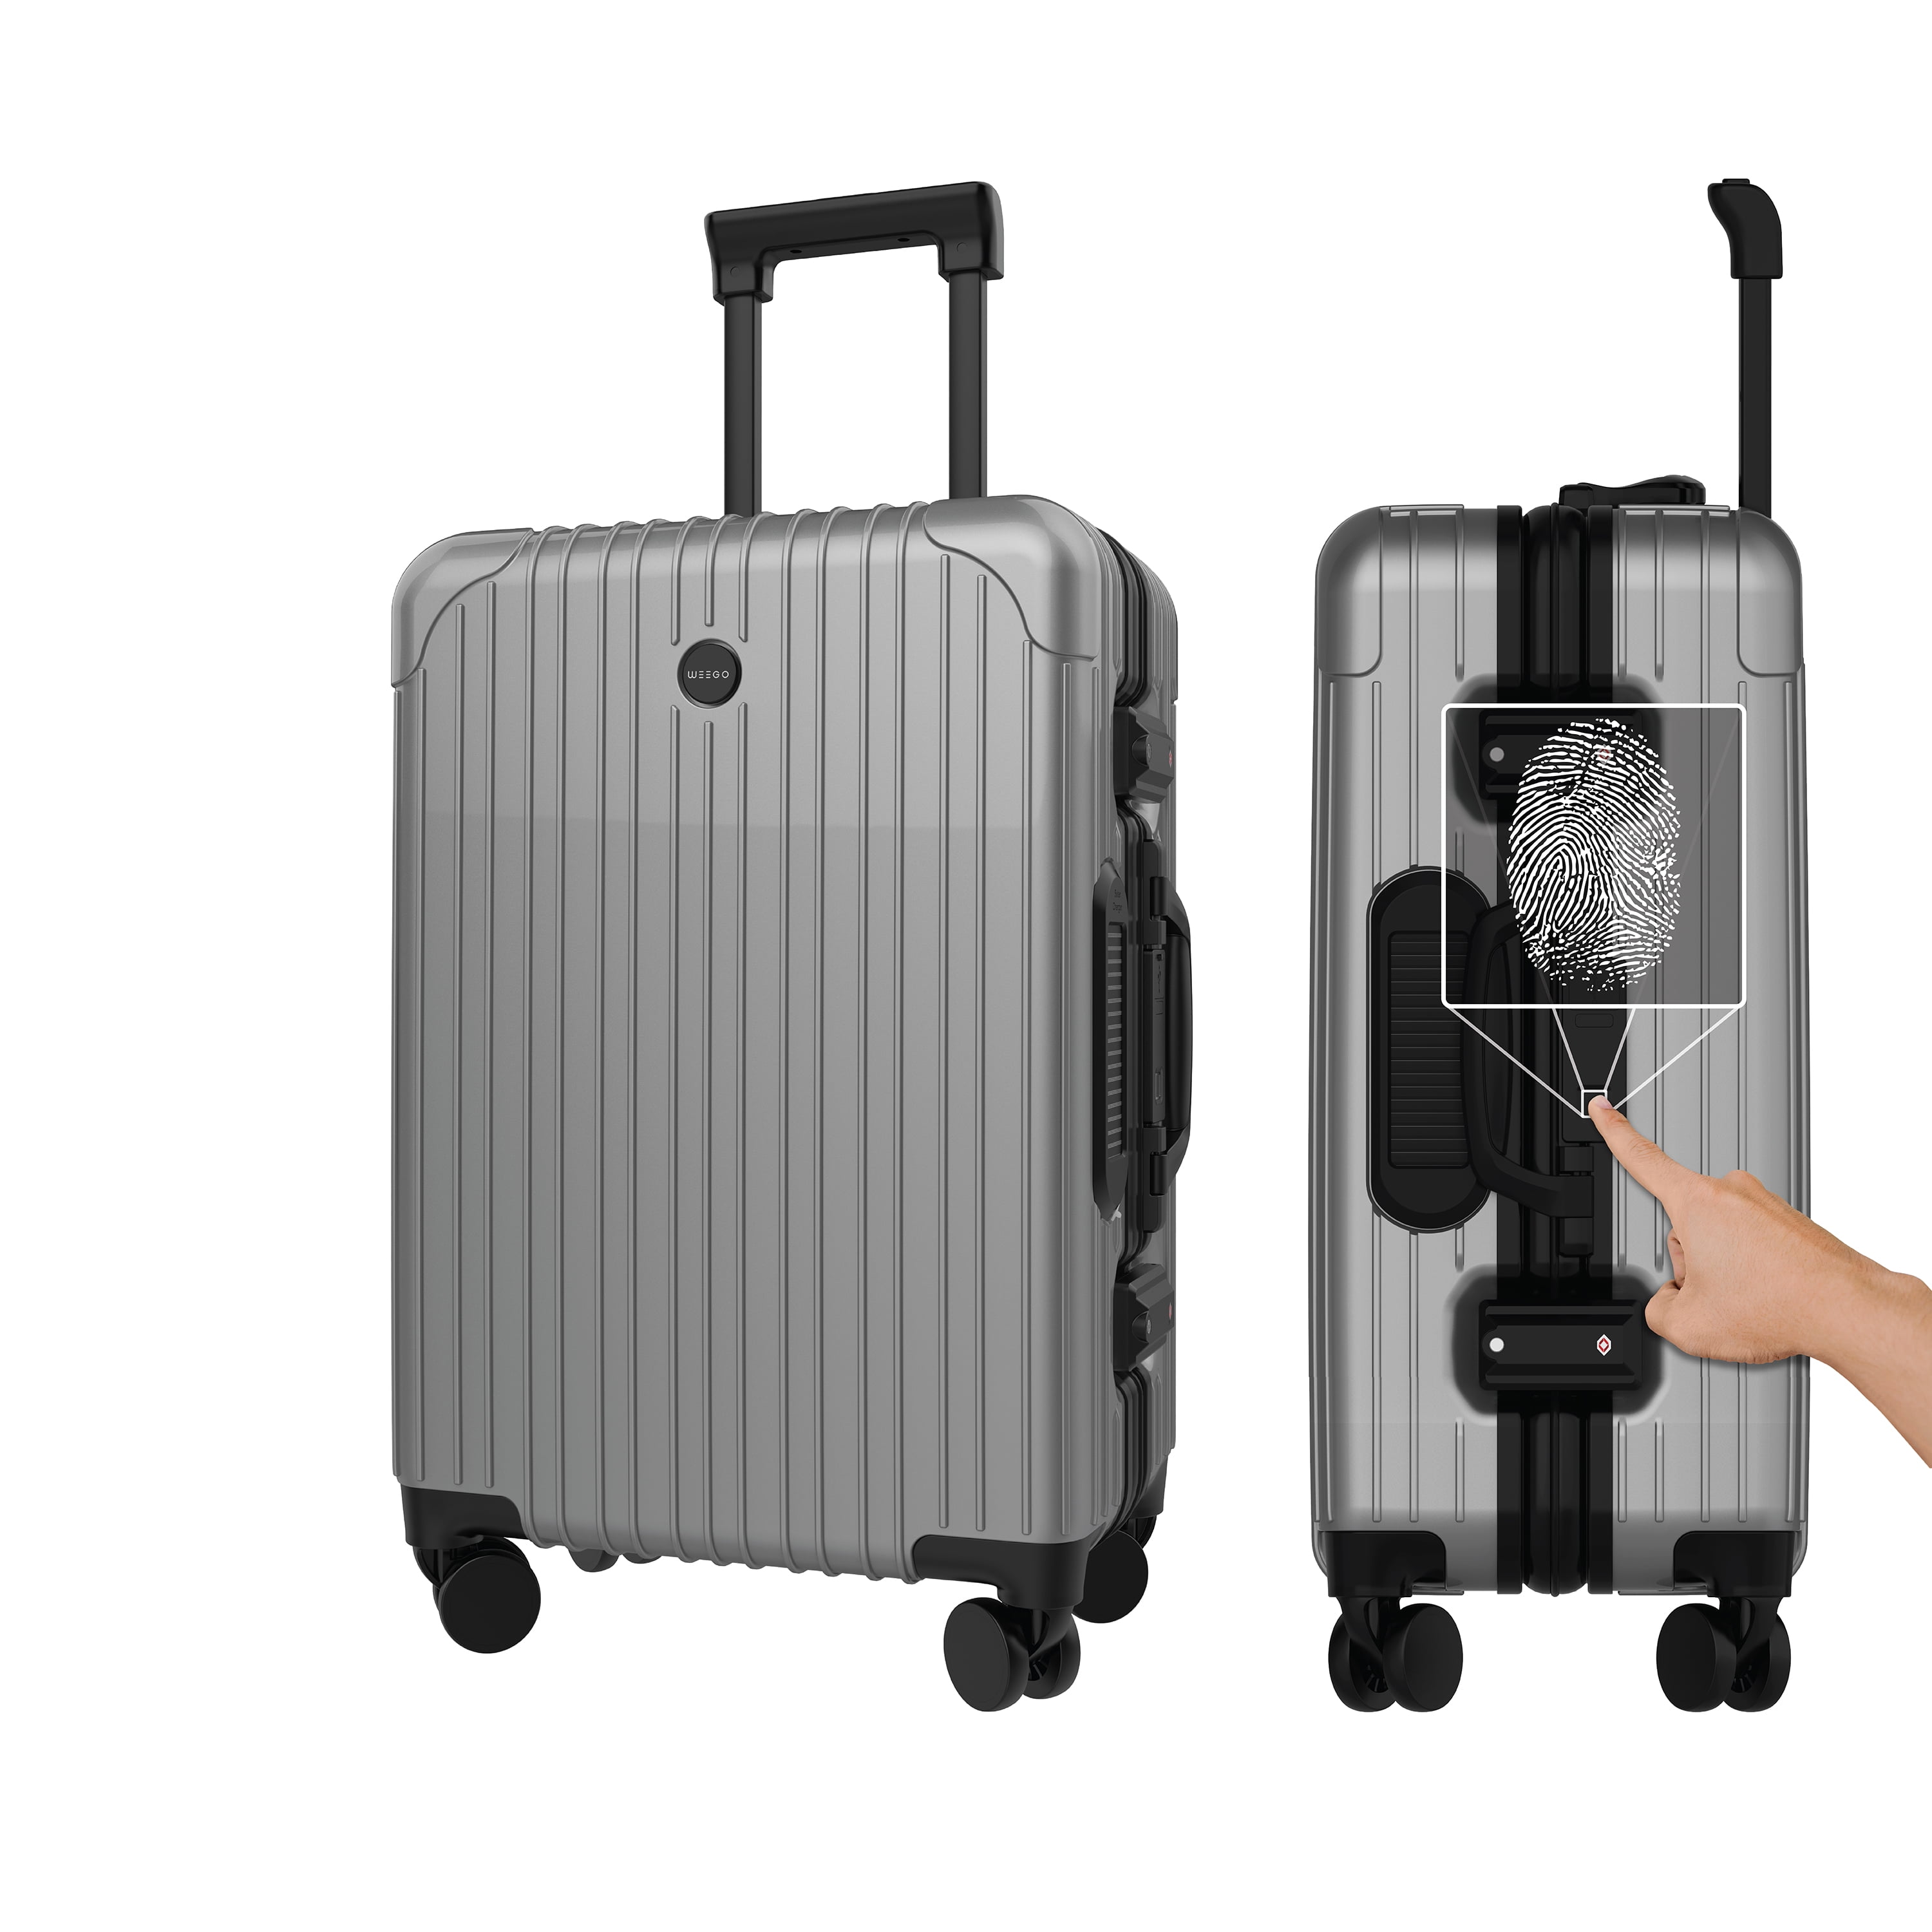 Hanke Innovative Design 20 Carry On Suitcase 24 Travel Luggage